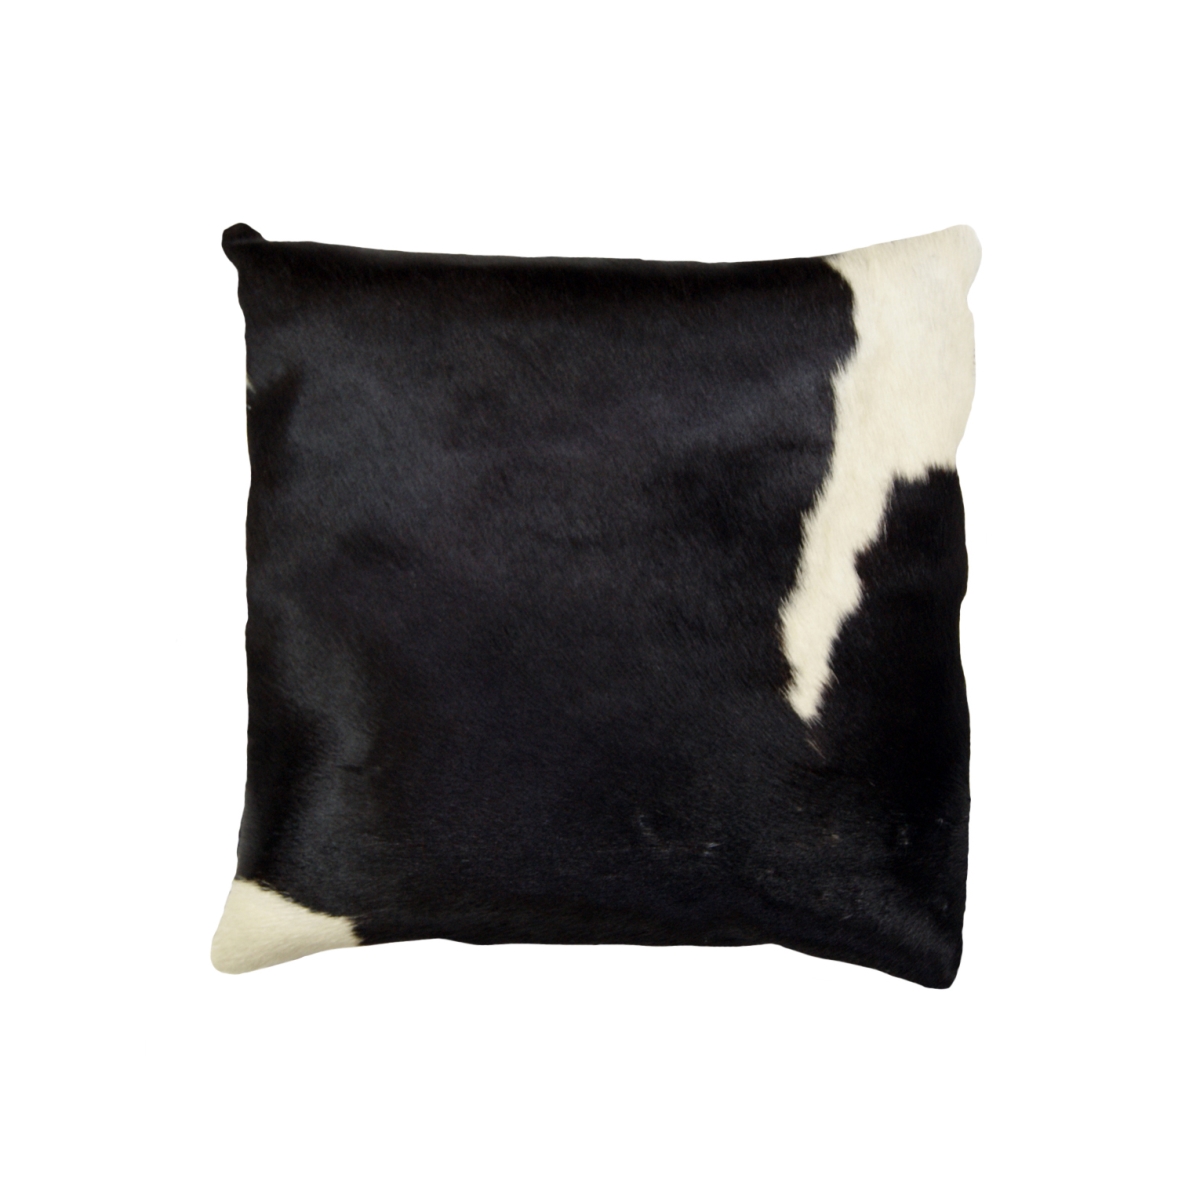 676685000132 18 X 18 In. Torino Kobe Cowhide Pillow - Black & White